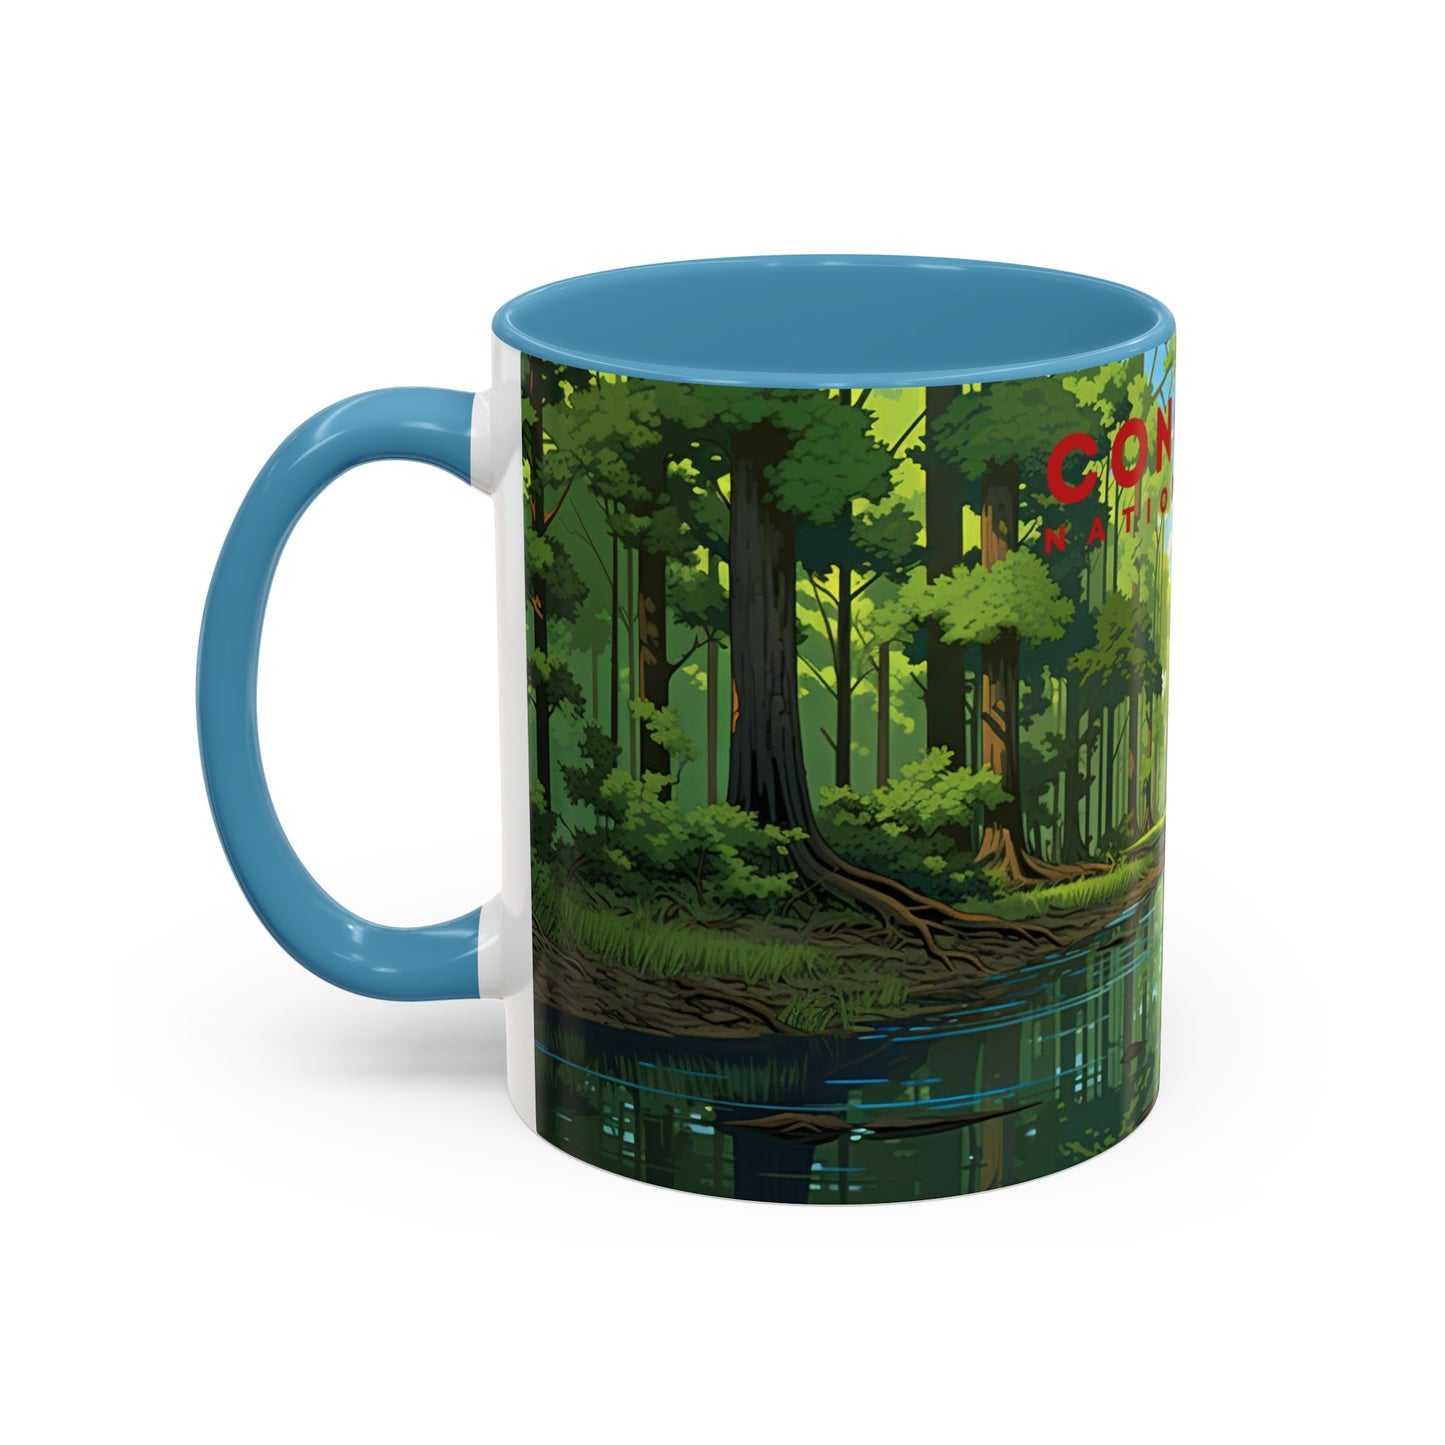 Congaree National Park Mug | Accent Coffee Mug (11, 15oz)